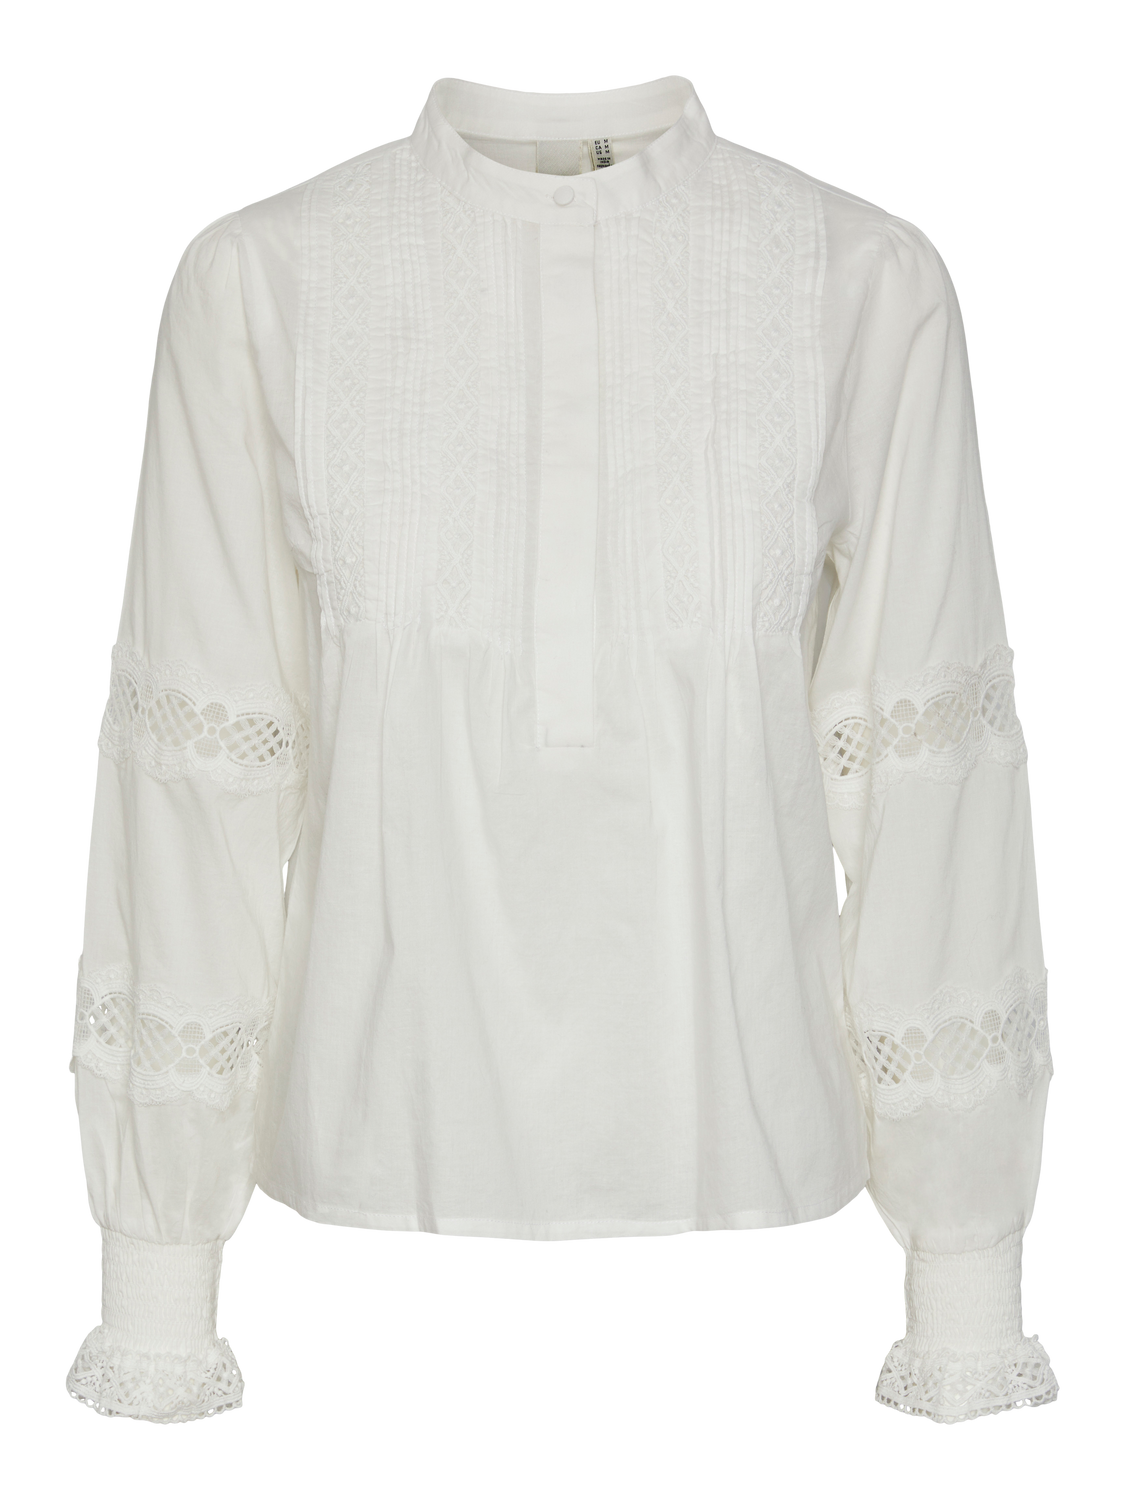 YASNELSA T-Shirts & Tops - Star White